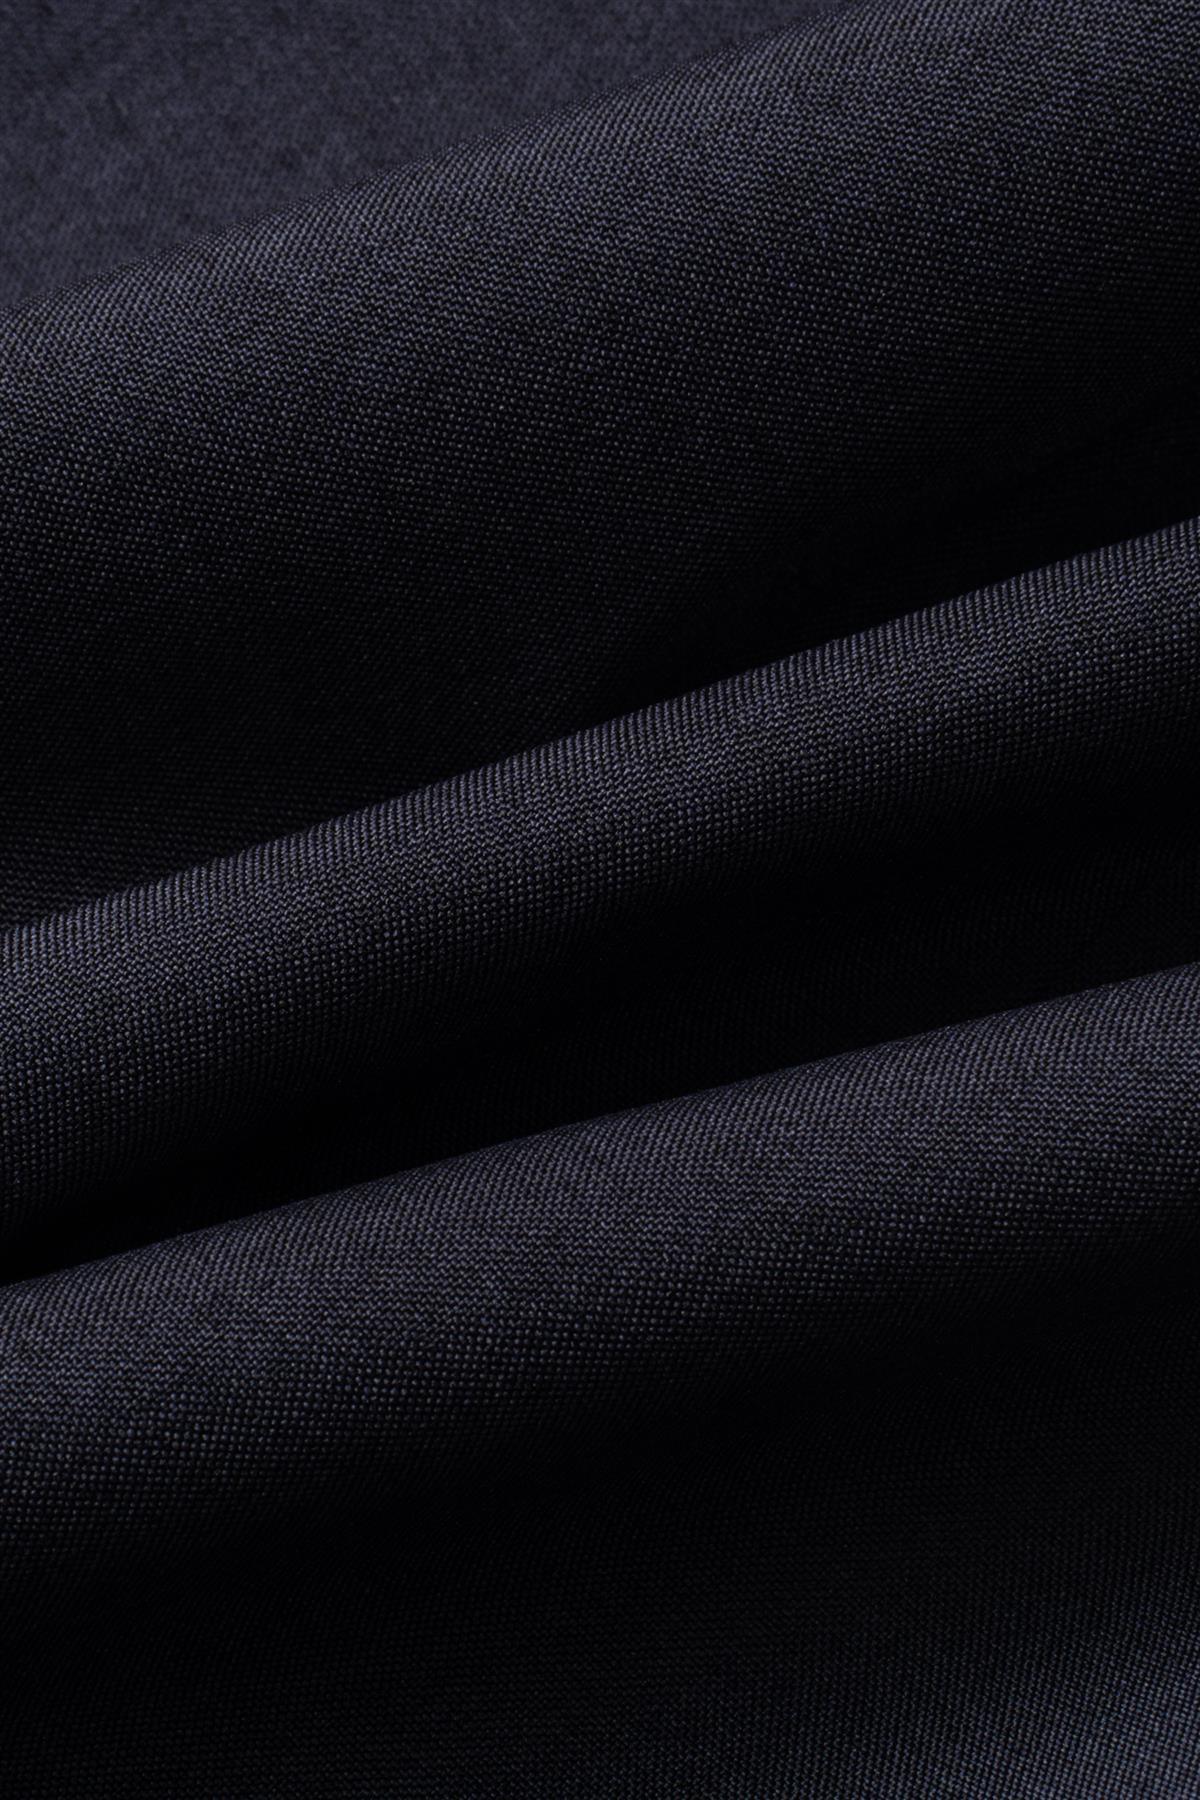 Brando mac navy long coat fabric swatch